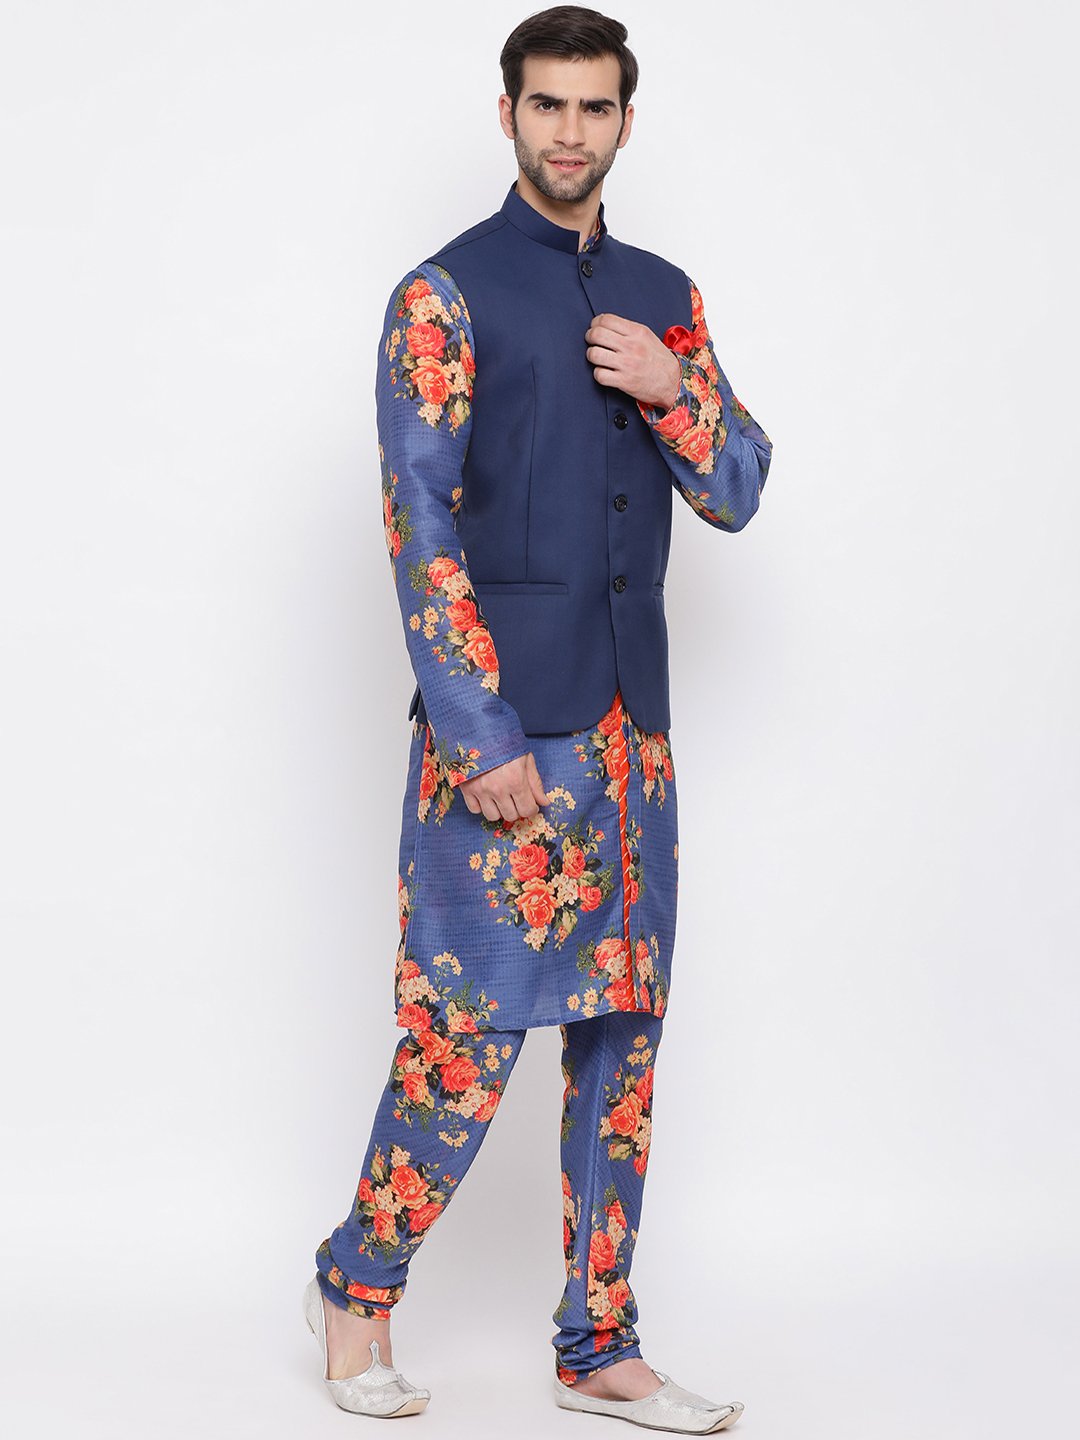 Men's Navy Blue Twill Jacket, Printed Kurta and Pyjama Set - Vastramay